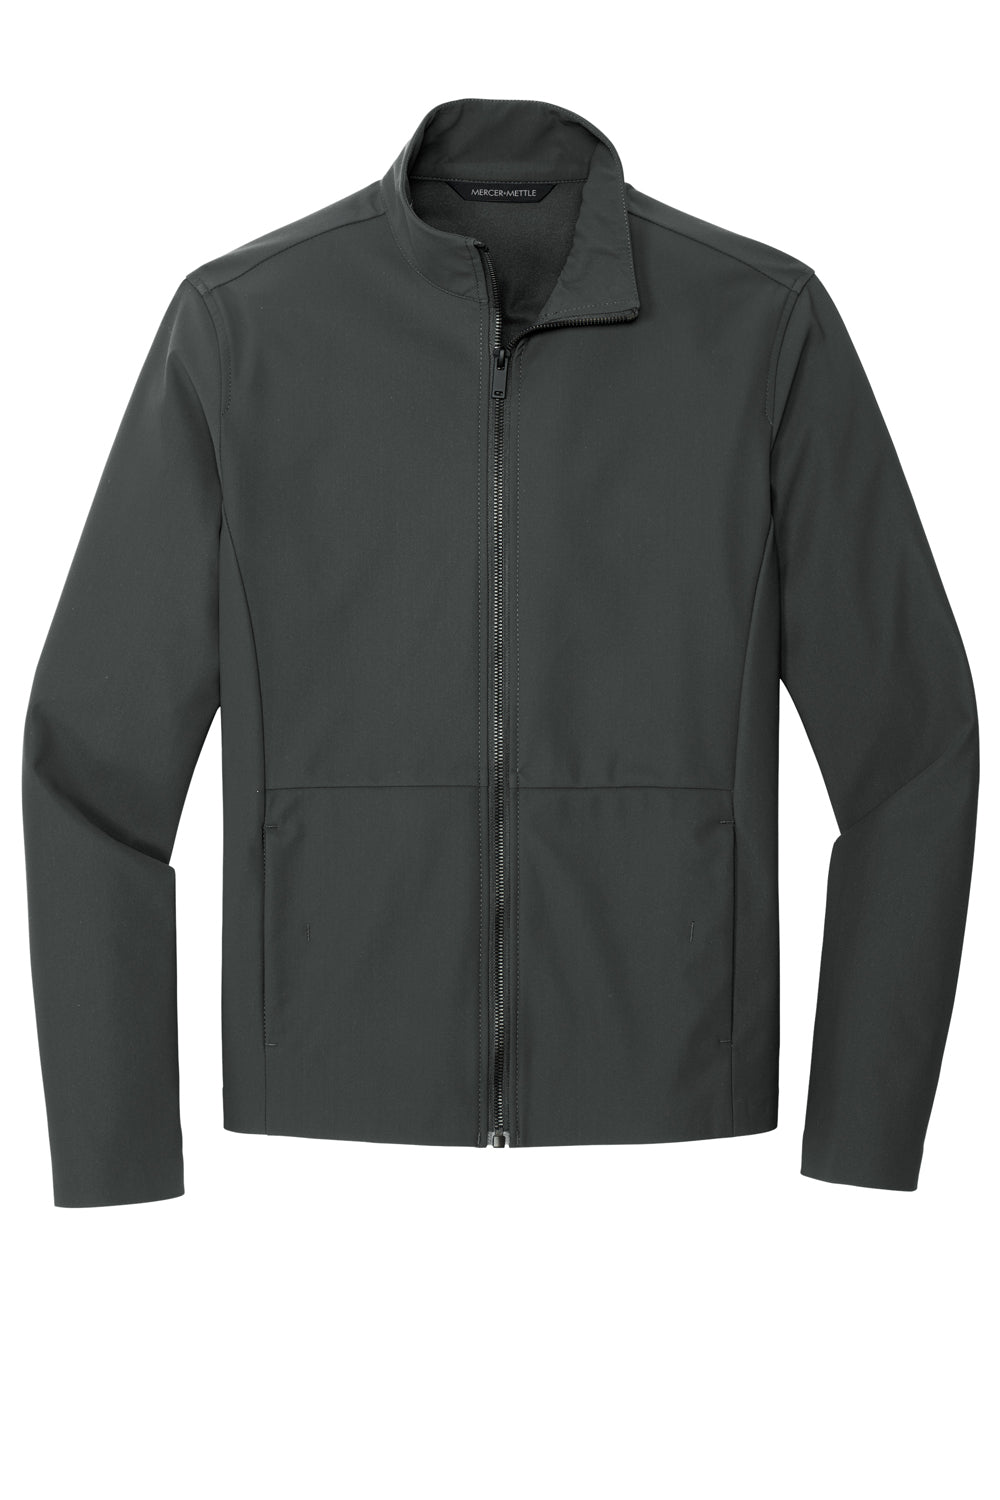 Mercer+Mettle MM7100 Faille Full Zip Soft Shell Jacket Anchor Grey Flat Front